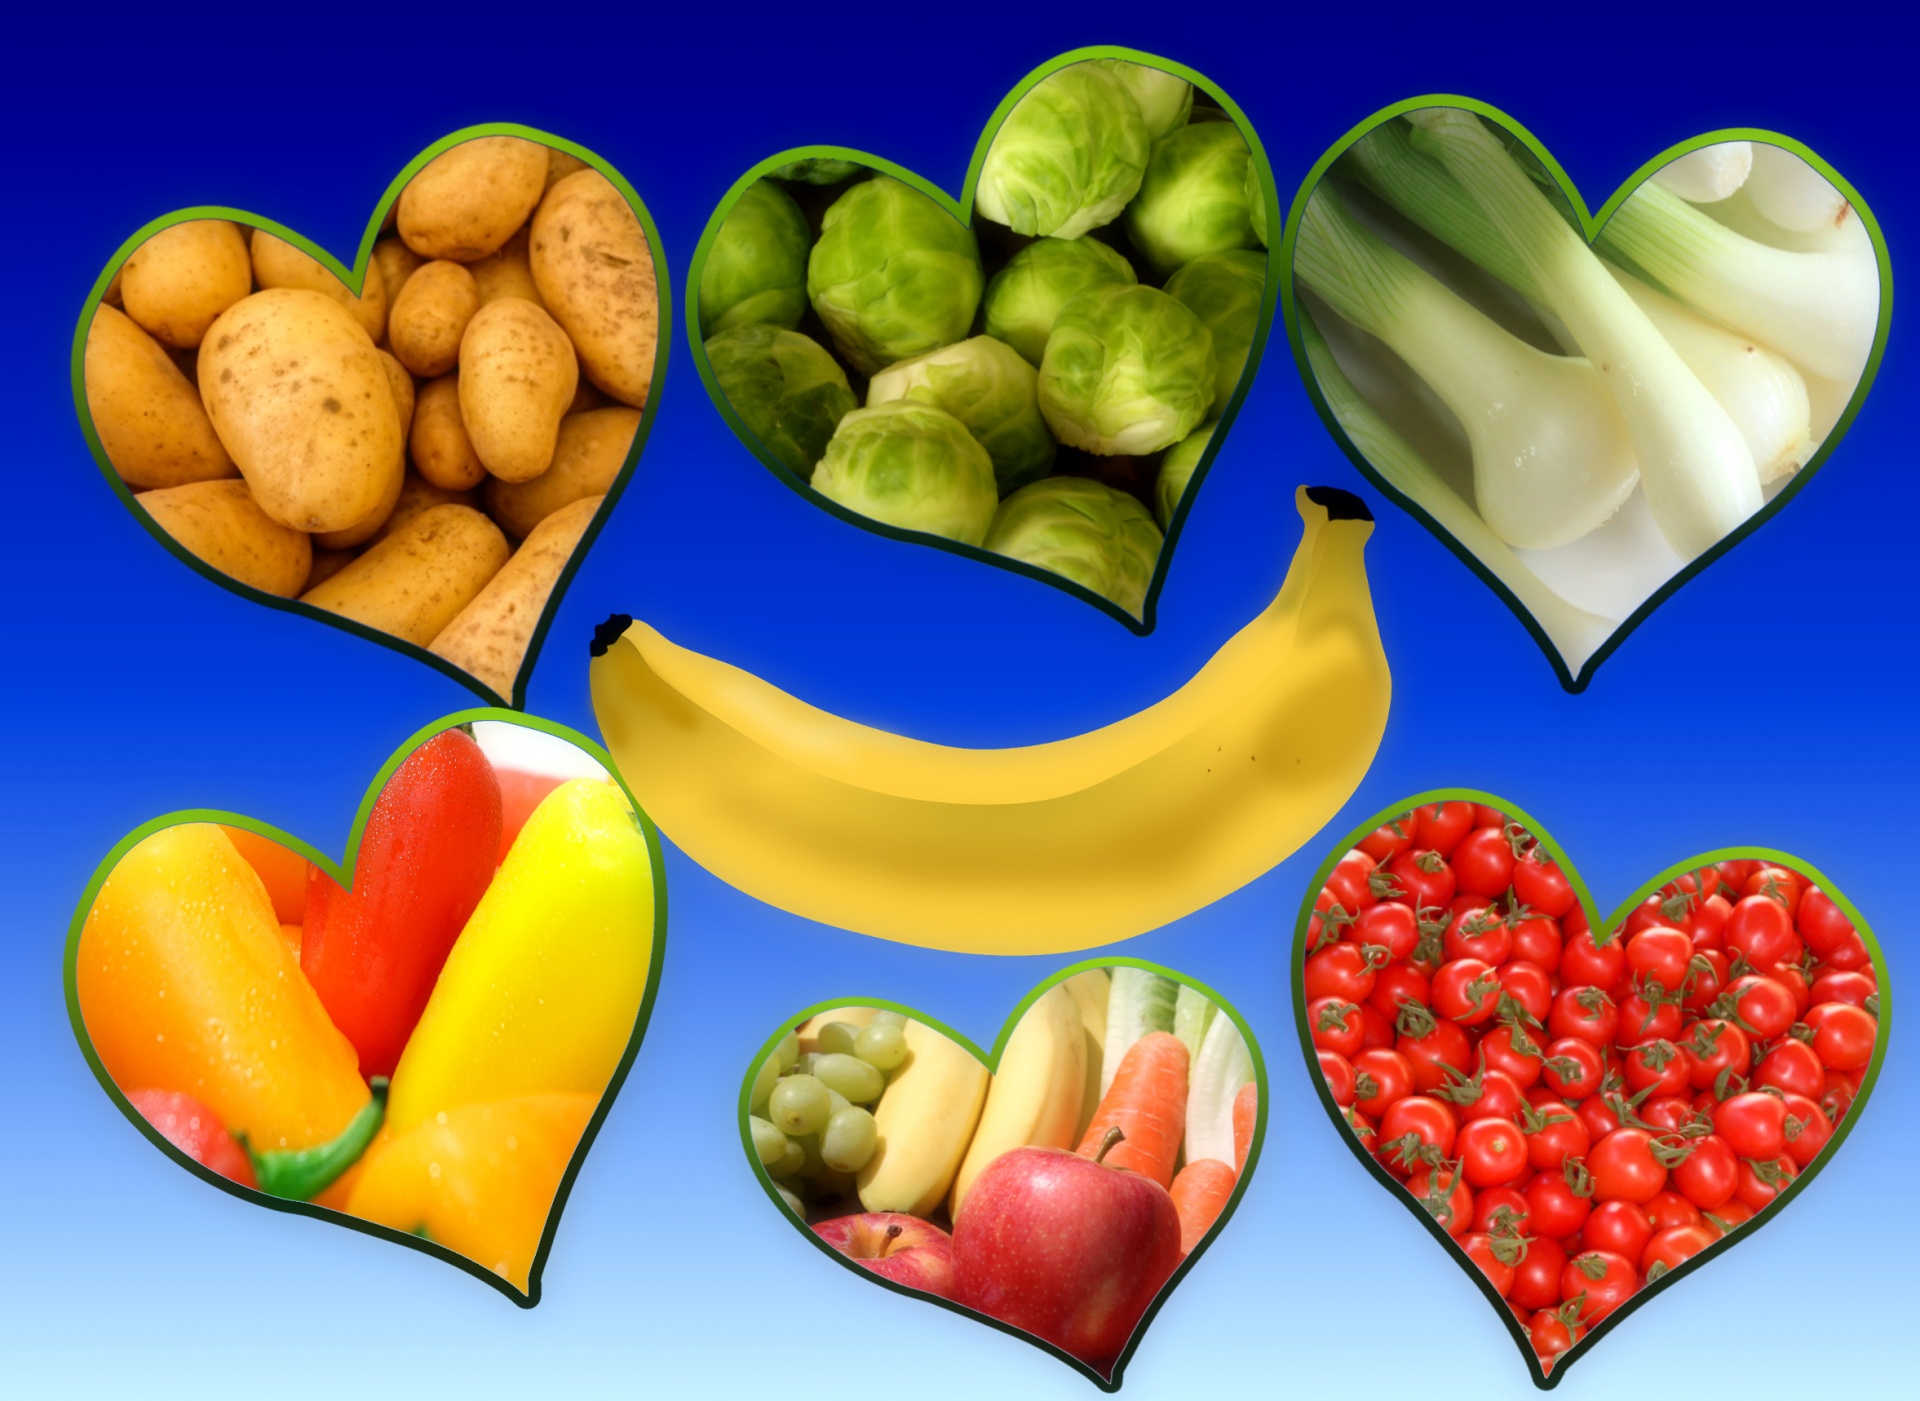 vegan fruits vegetables free photo